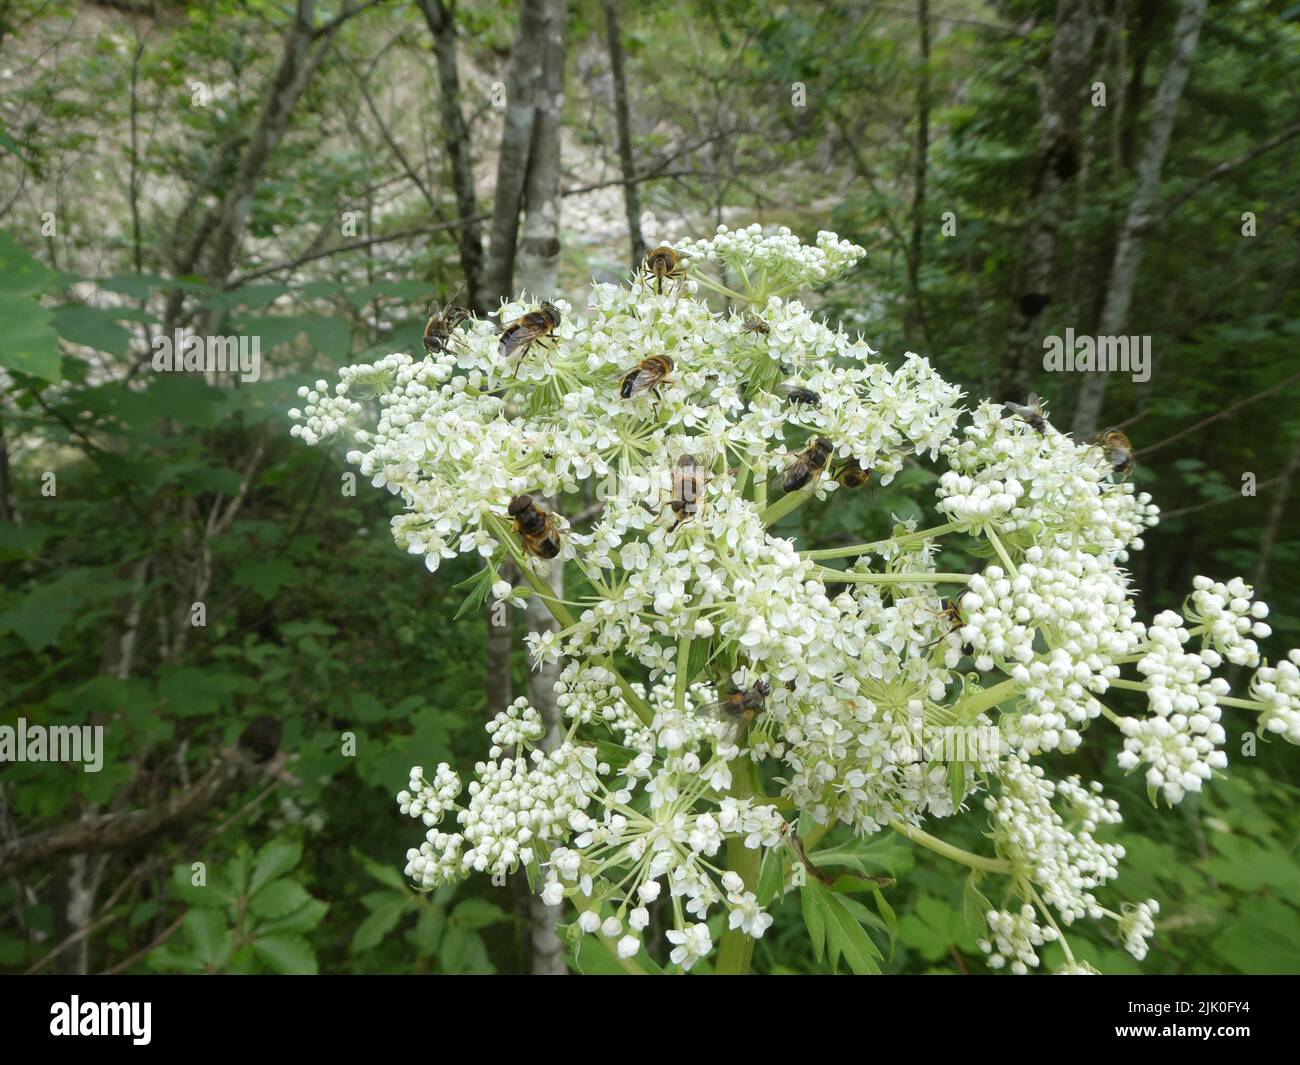 Wild bees sittimg on flower of elder Stock Photo